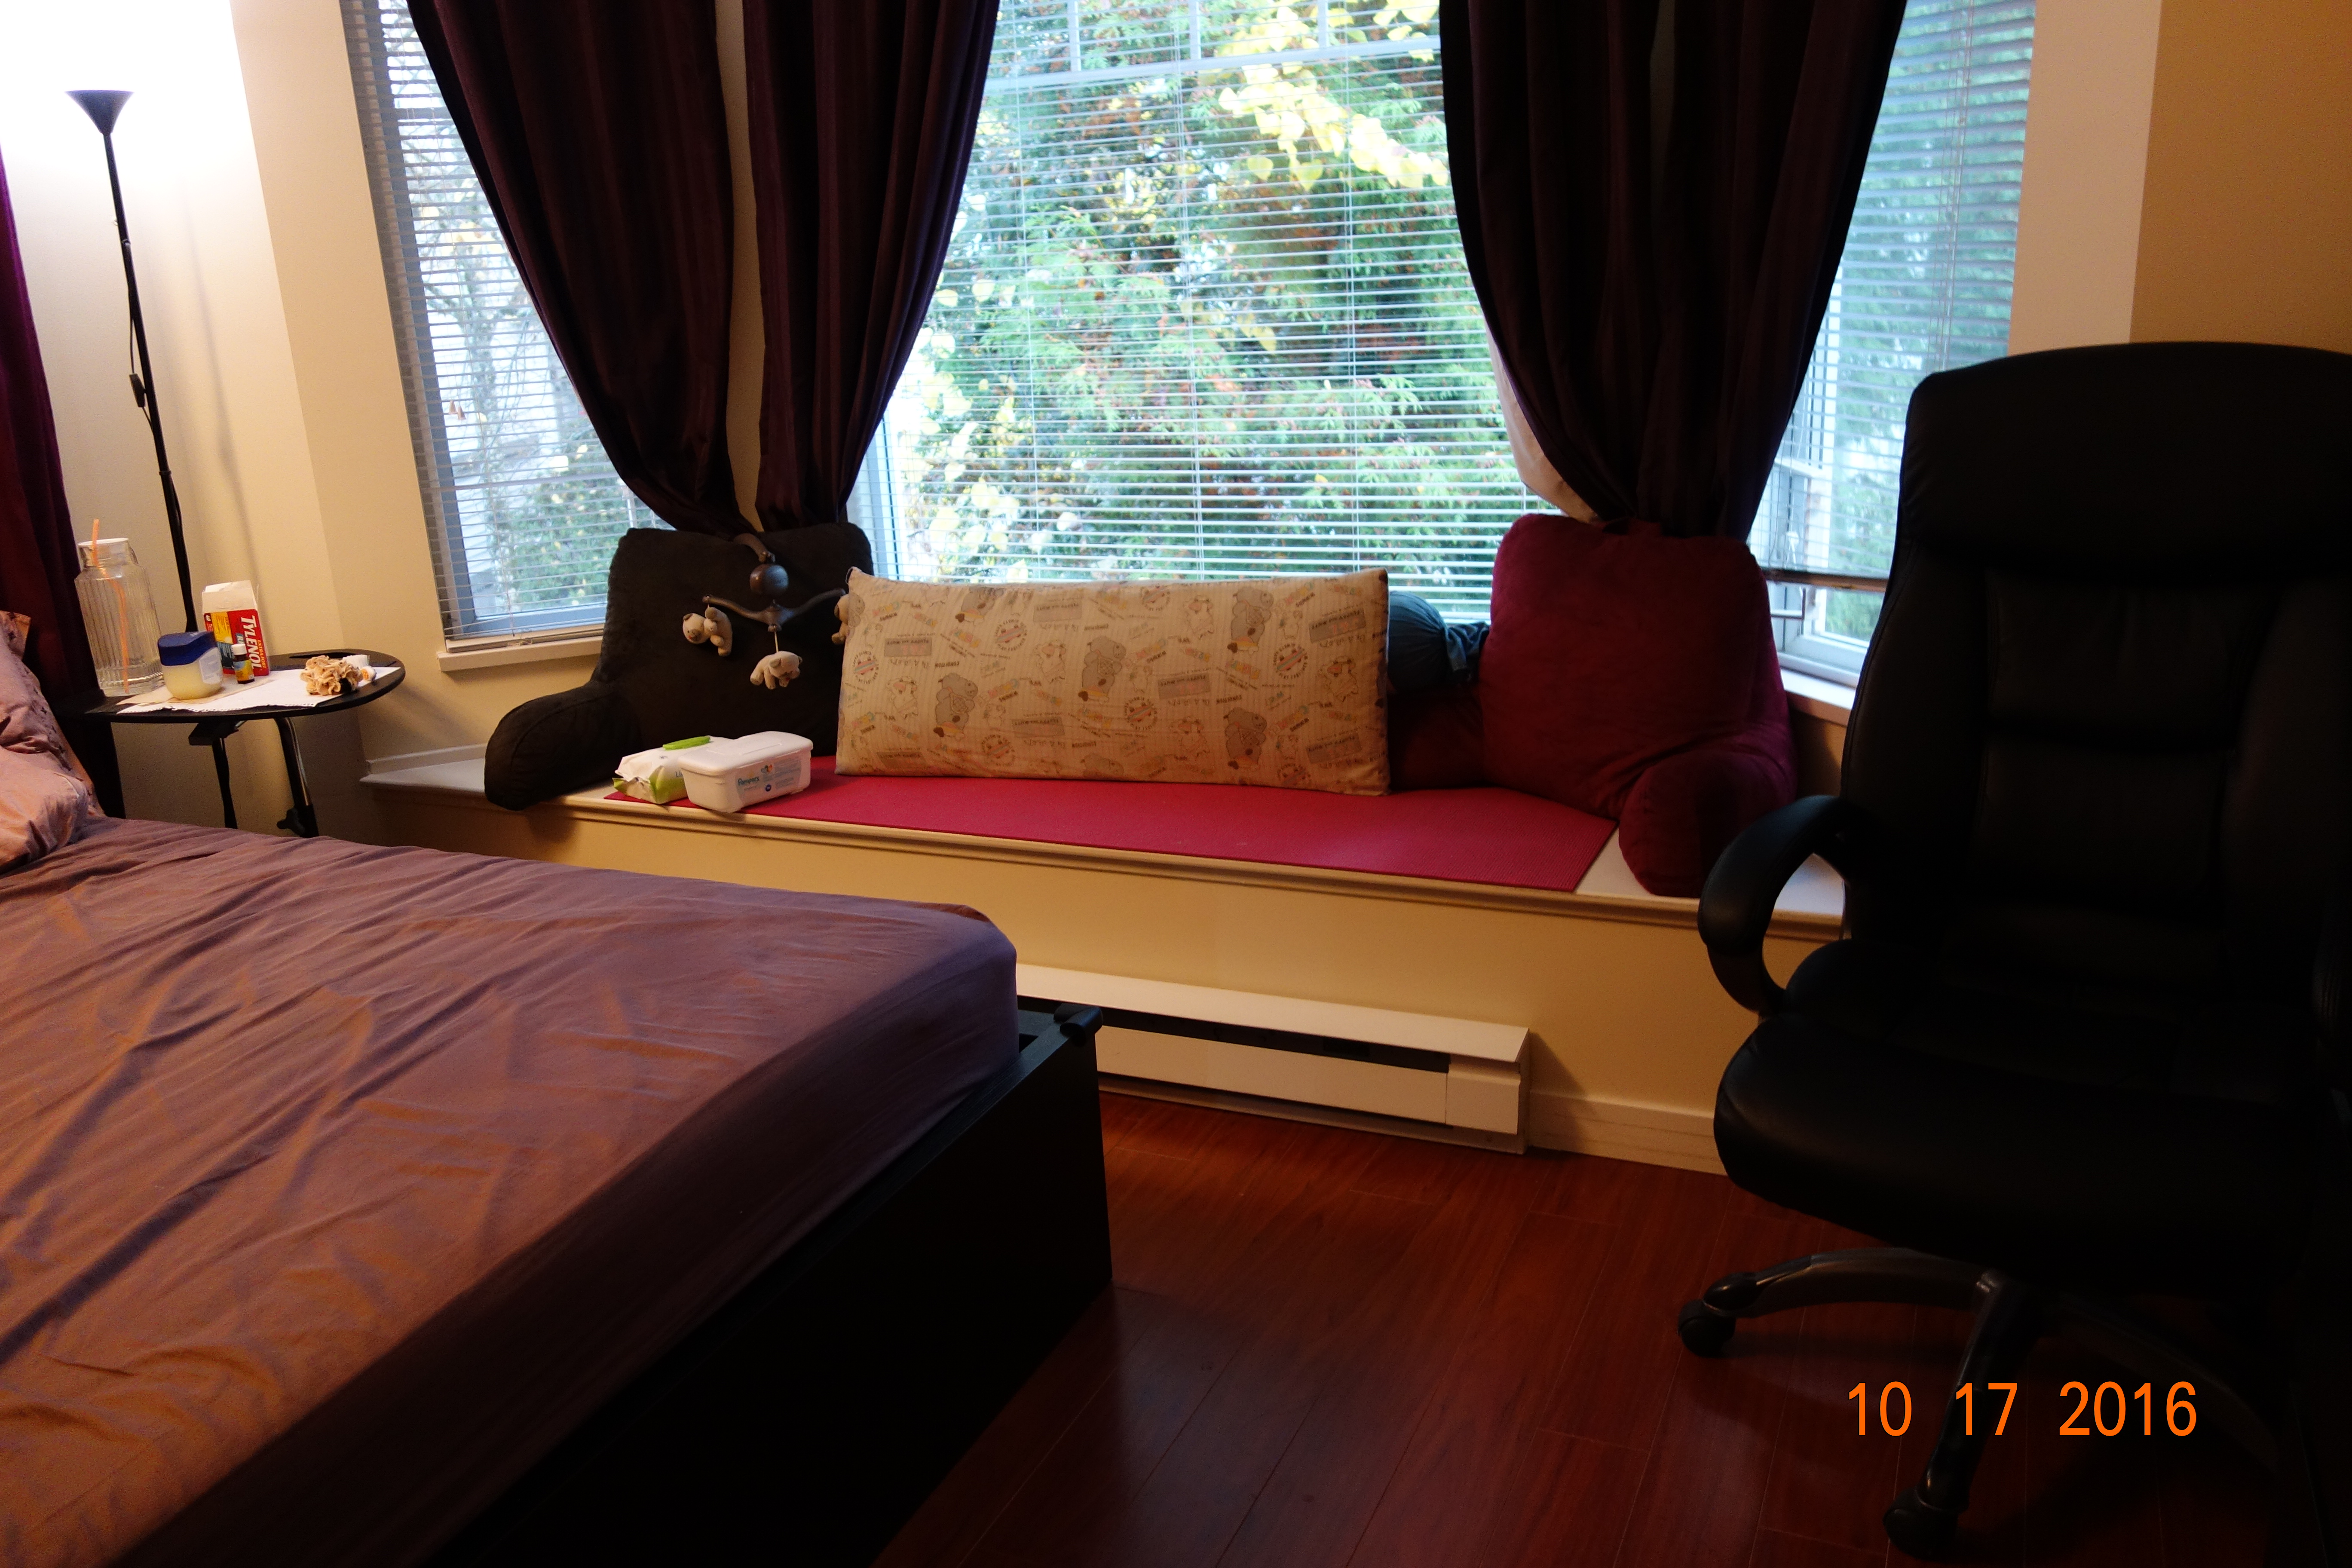 bedroom before home renovation crest - home renovations vancouver - flipside homes